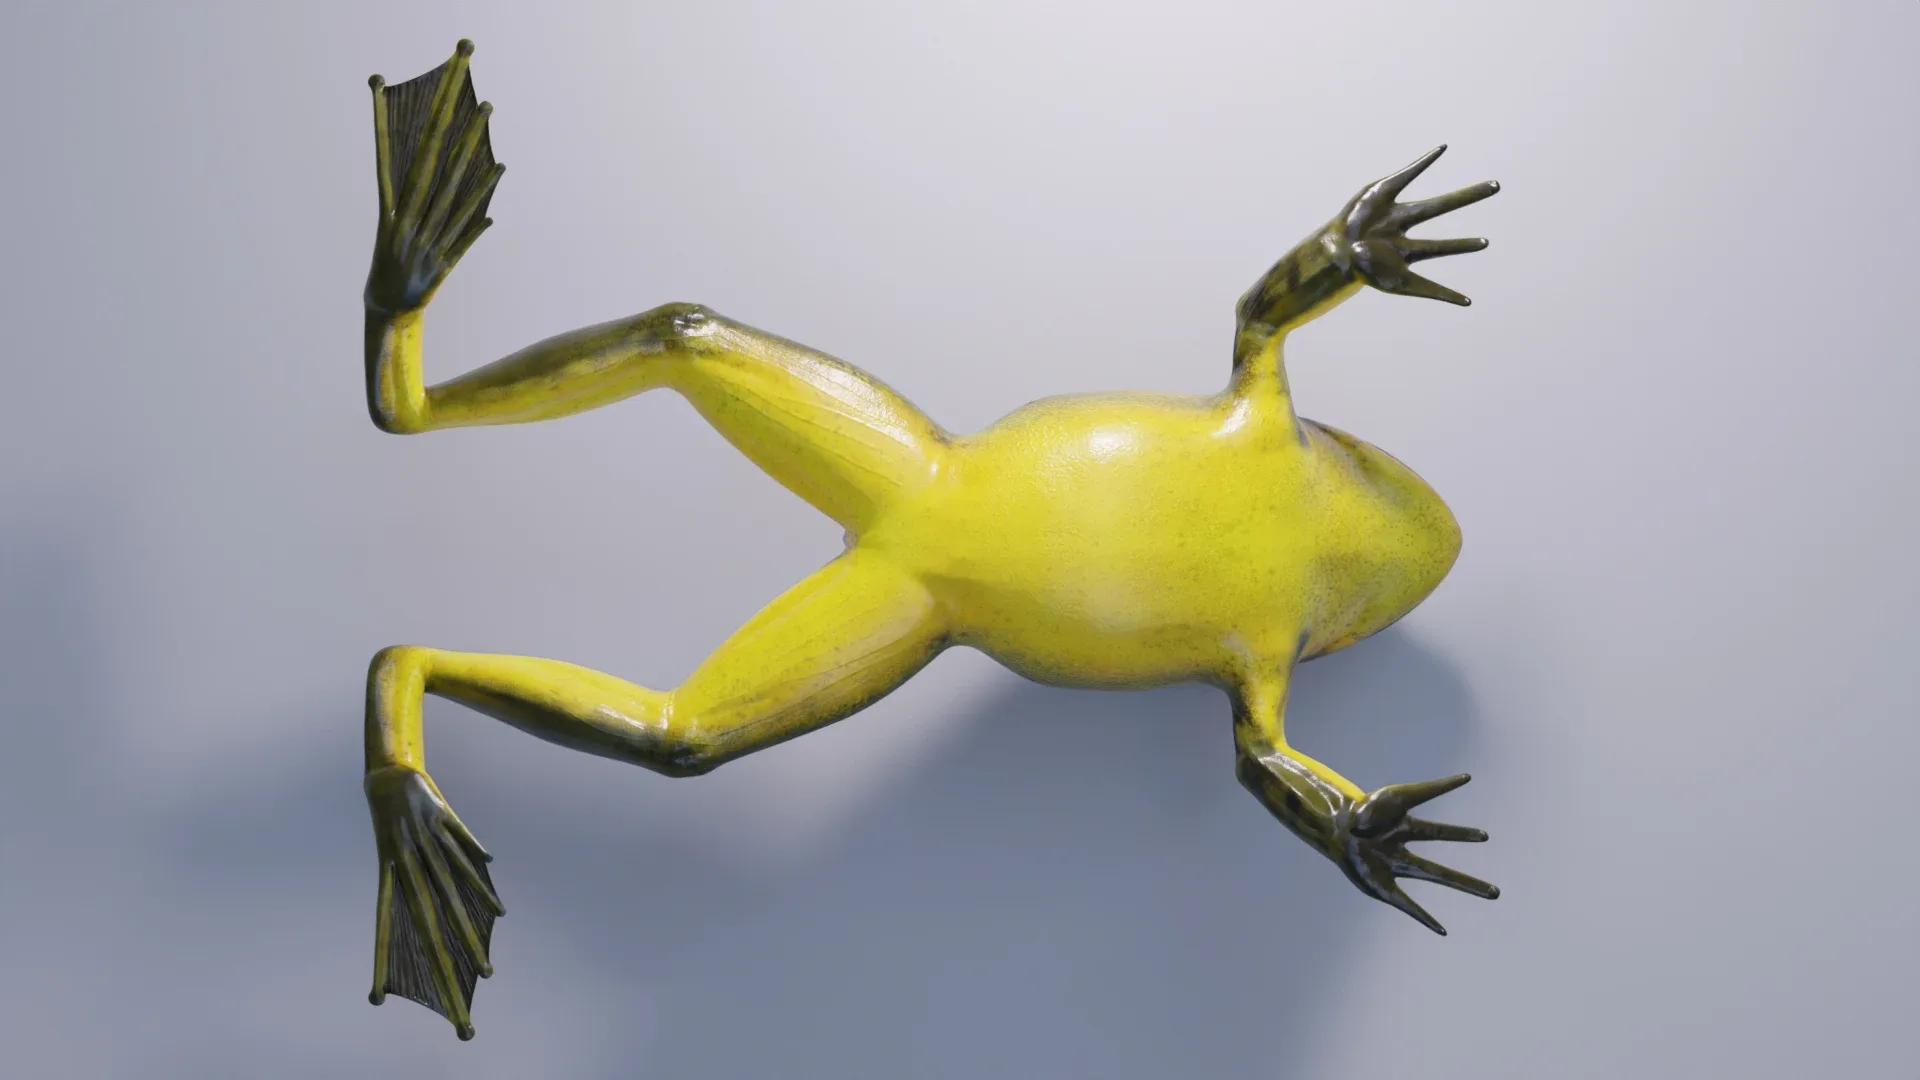 Goliath Bullfrog - Animated